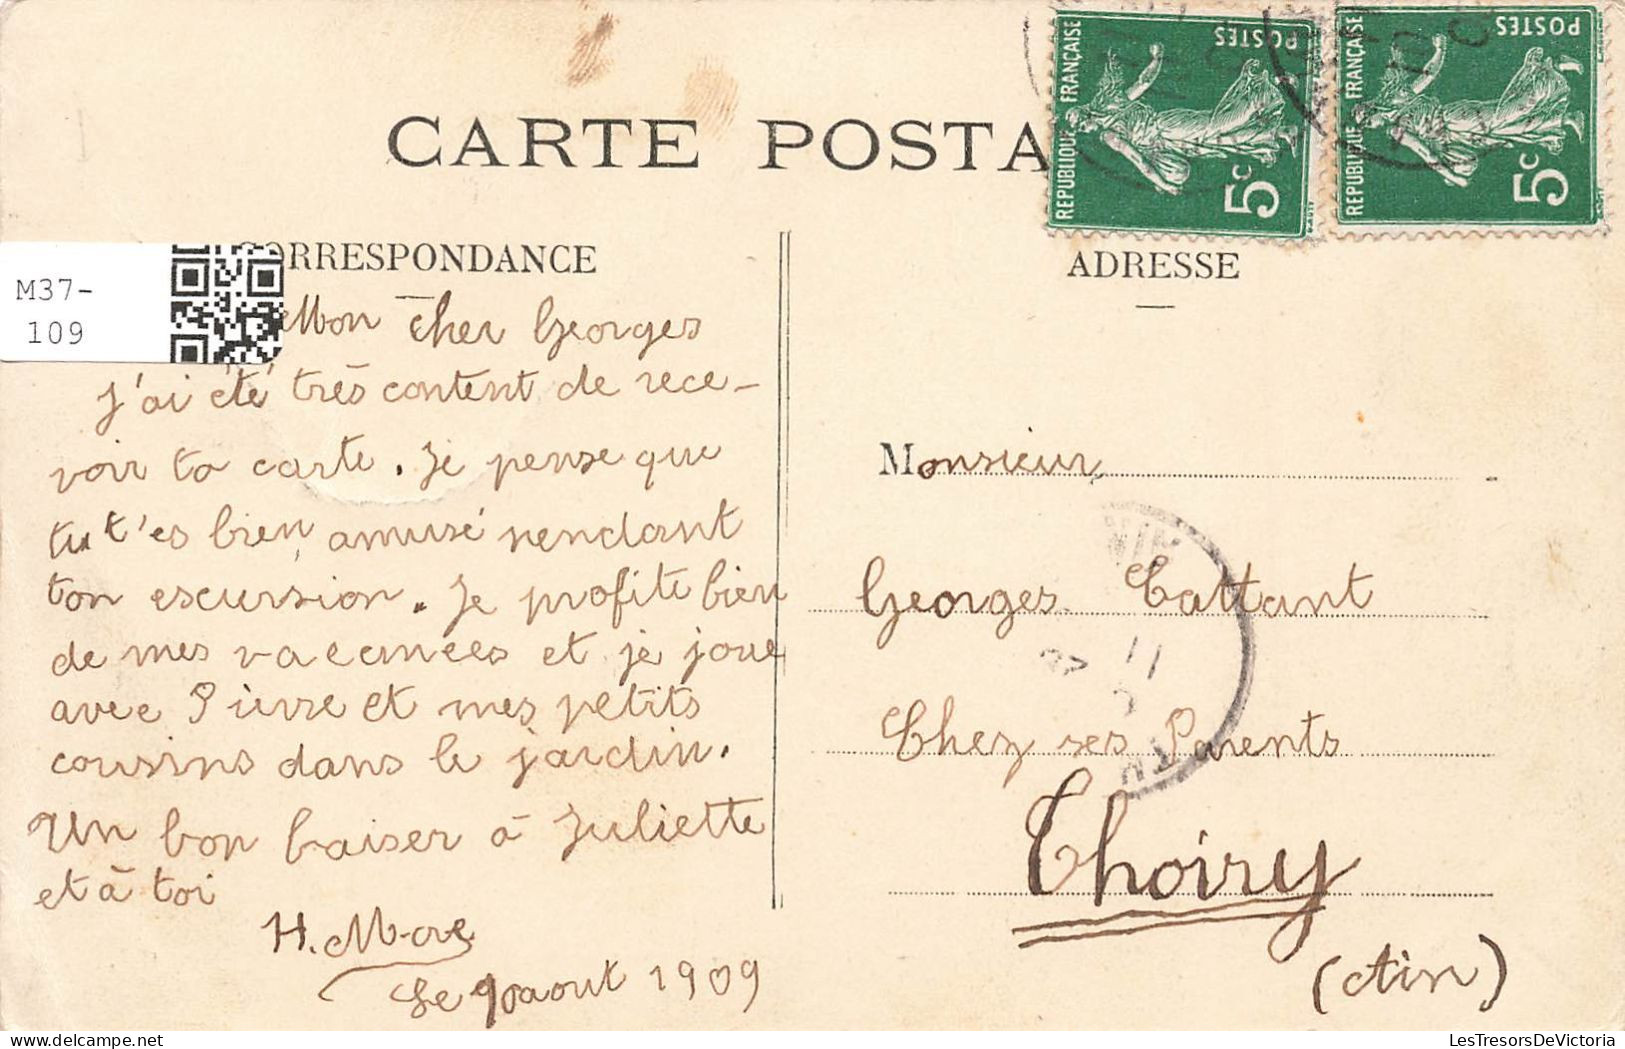 FRANCE - Champigny - La Marne - Etude Artistique - Carte Postale Ancienne - Champigny Sur Marne